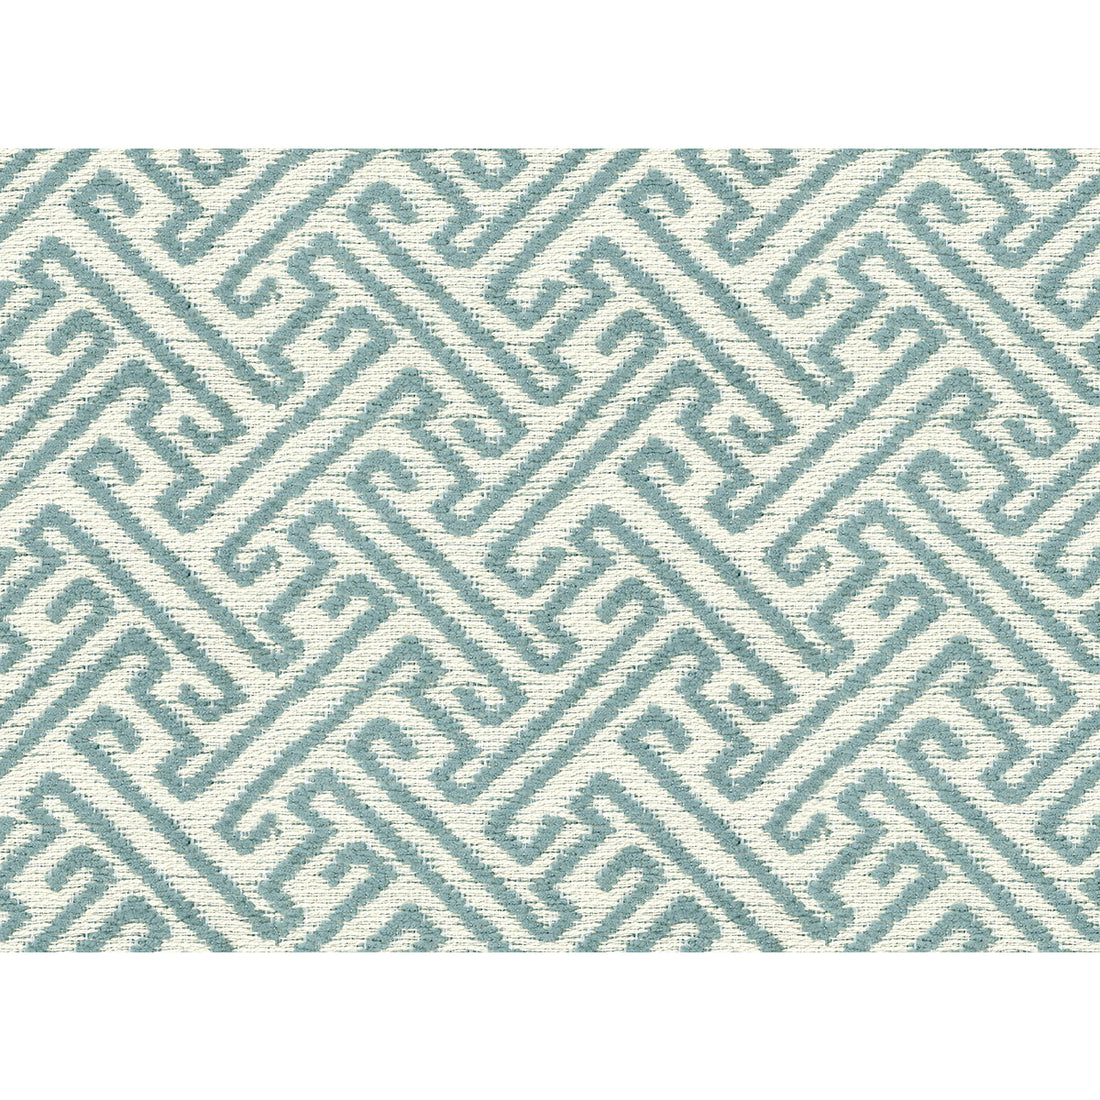 Kravet Smart fabric in 30698-1516 color - pattern 30698.1516.0 - by Kravet Smart